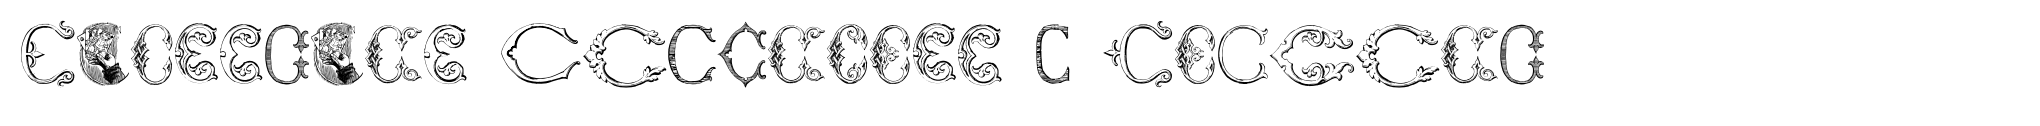 Victorian Alphabets C Regular image